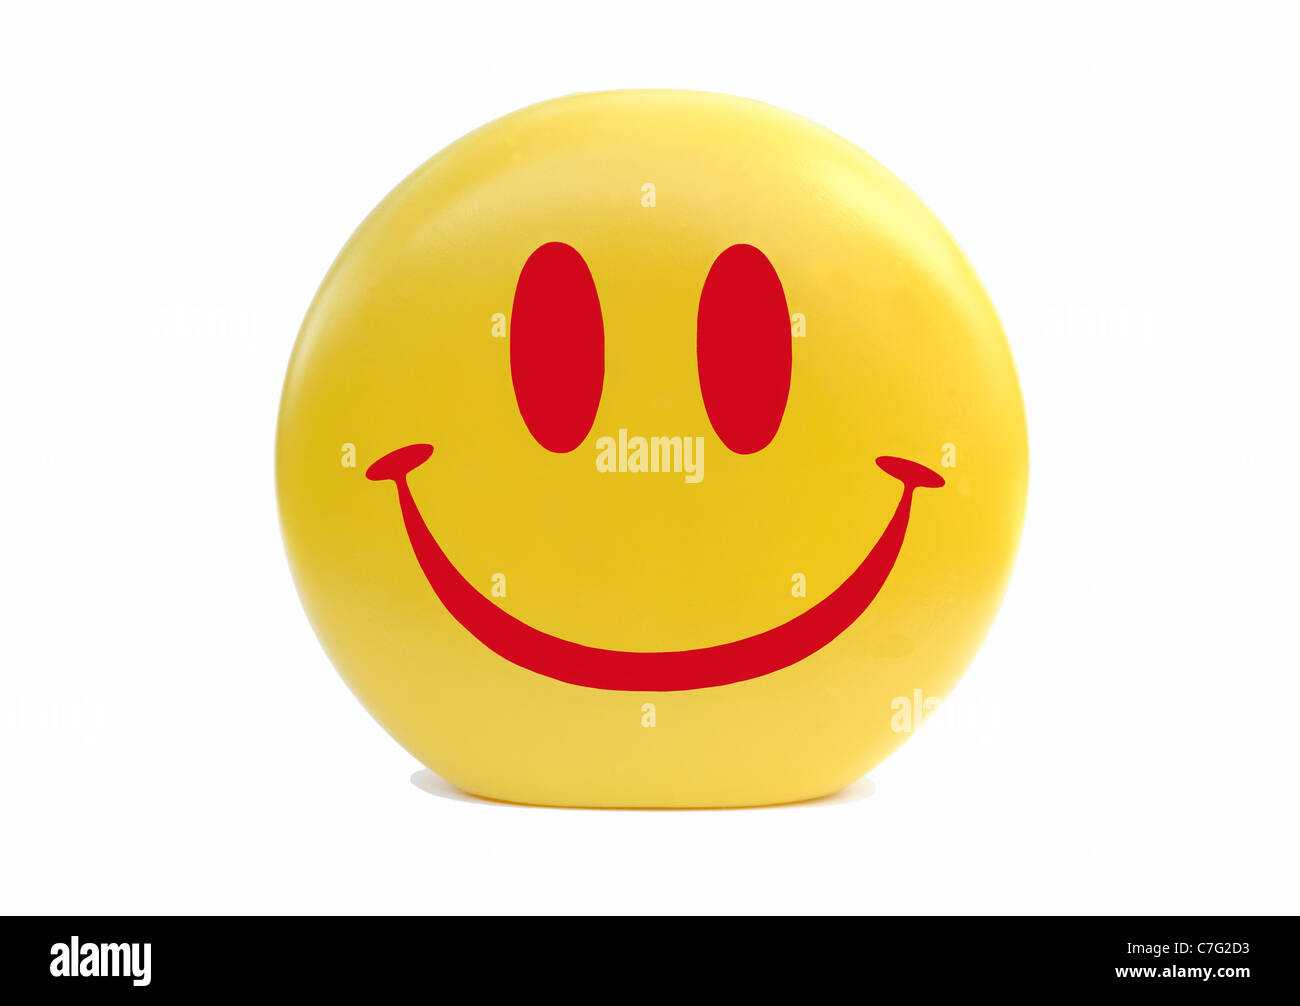 Smiley face photo graphic colours border Stock Photo - Alamy